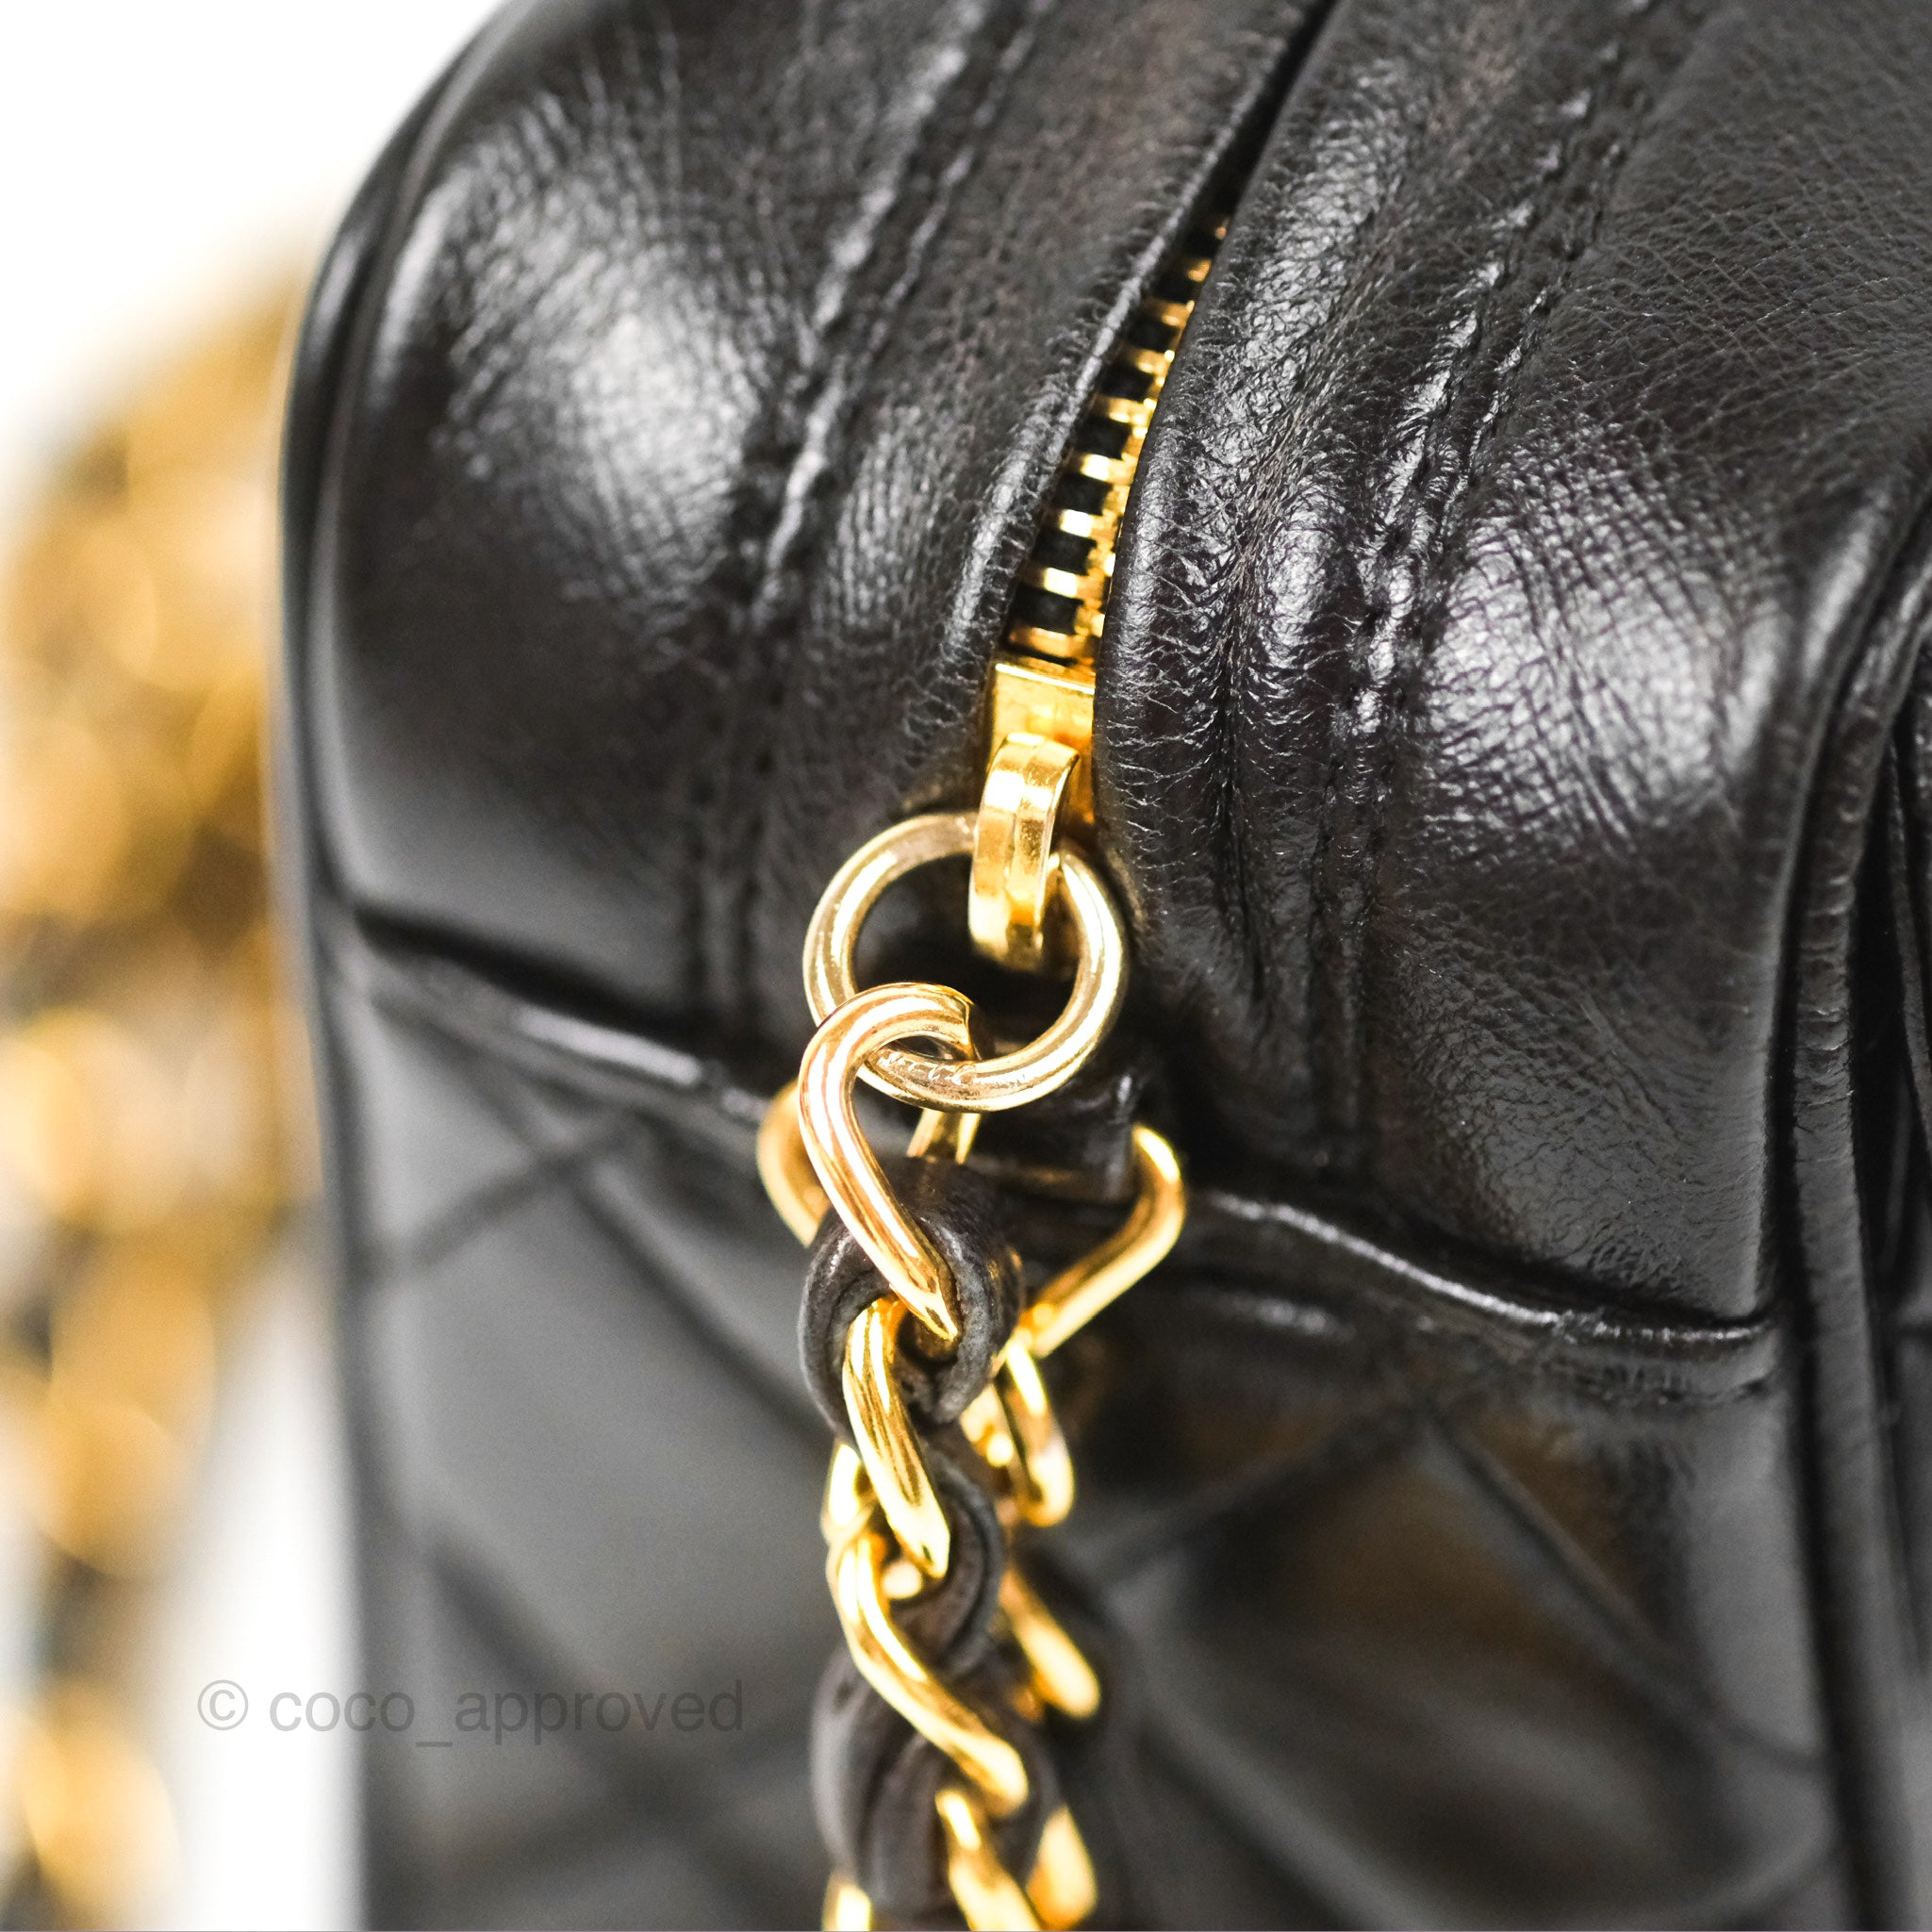 vintage chanel quilted handbag leather